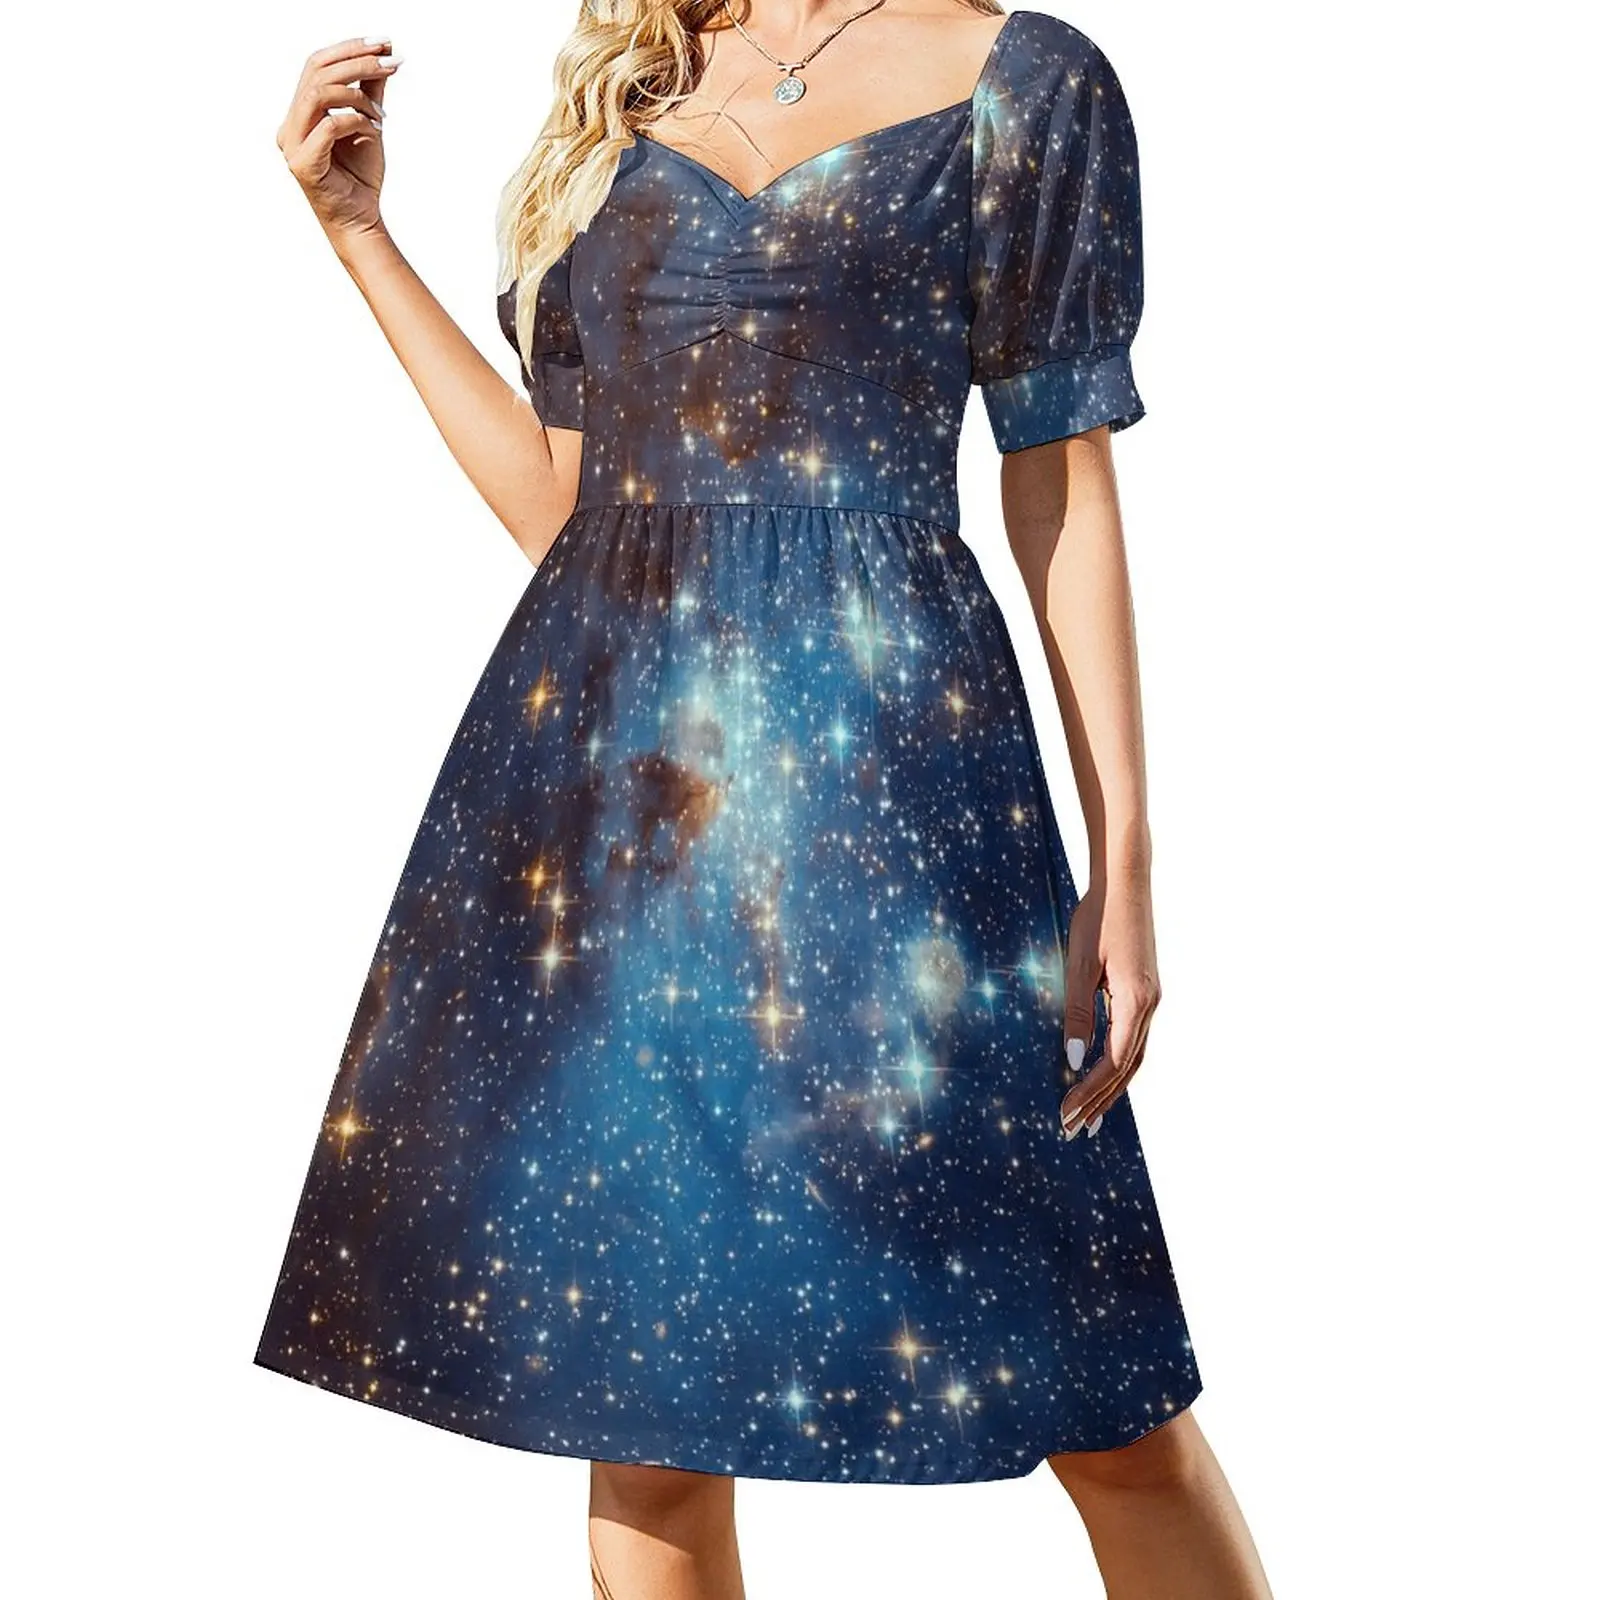 

Blue Nebula Stars Space Sleeveless Dress Clothing Party dresses